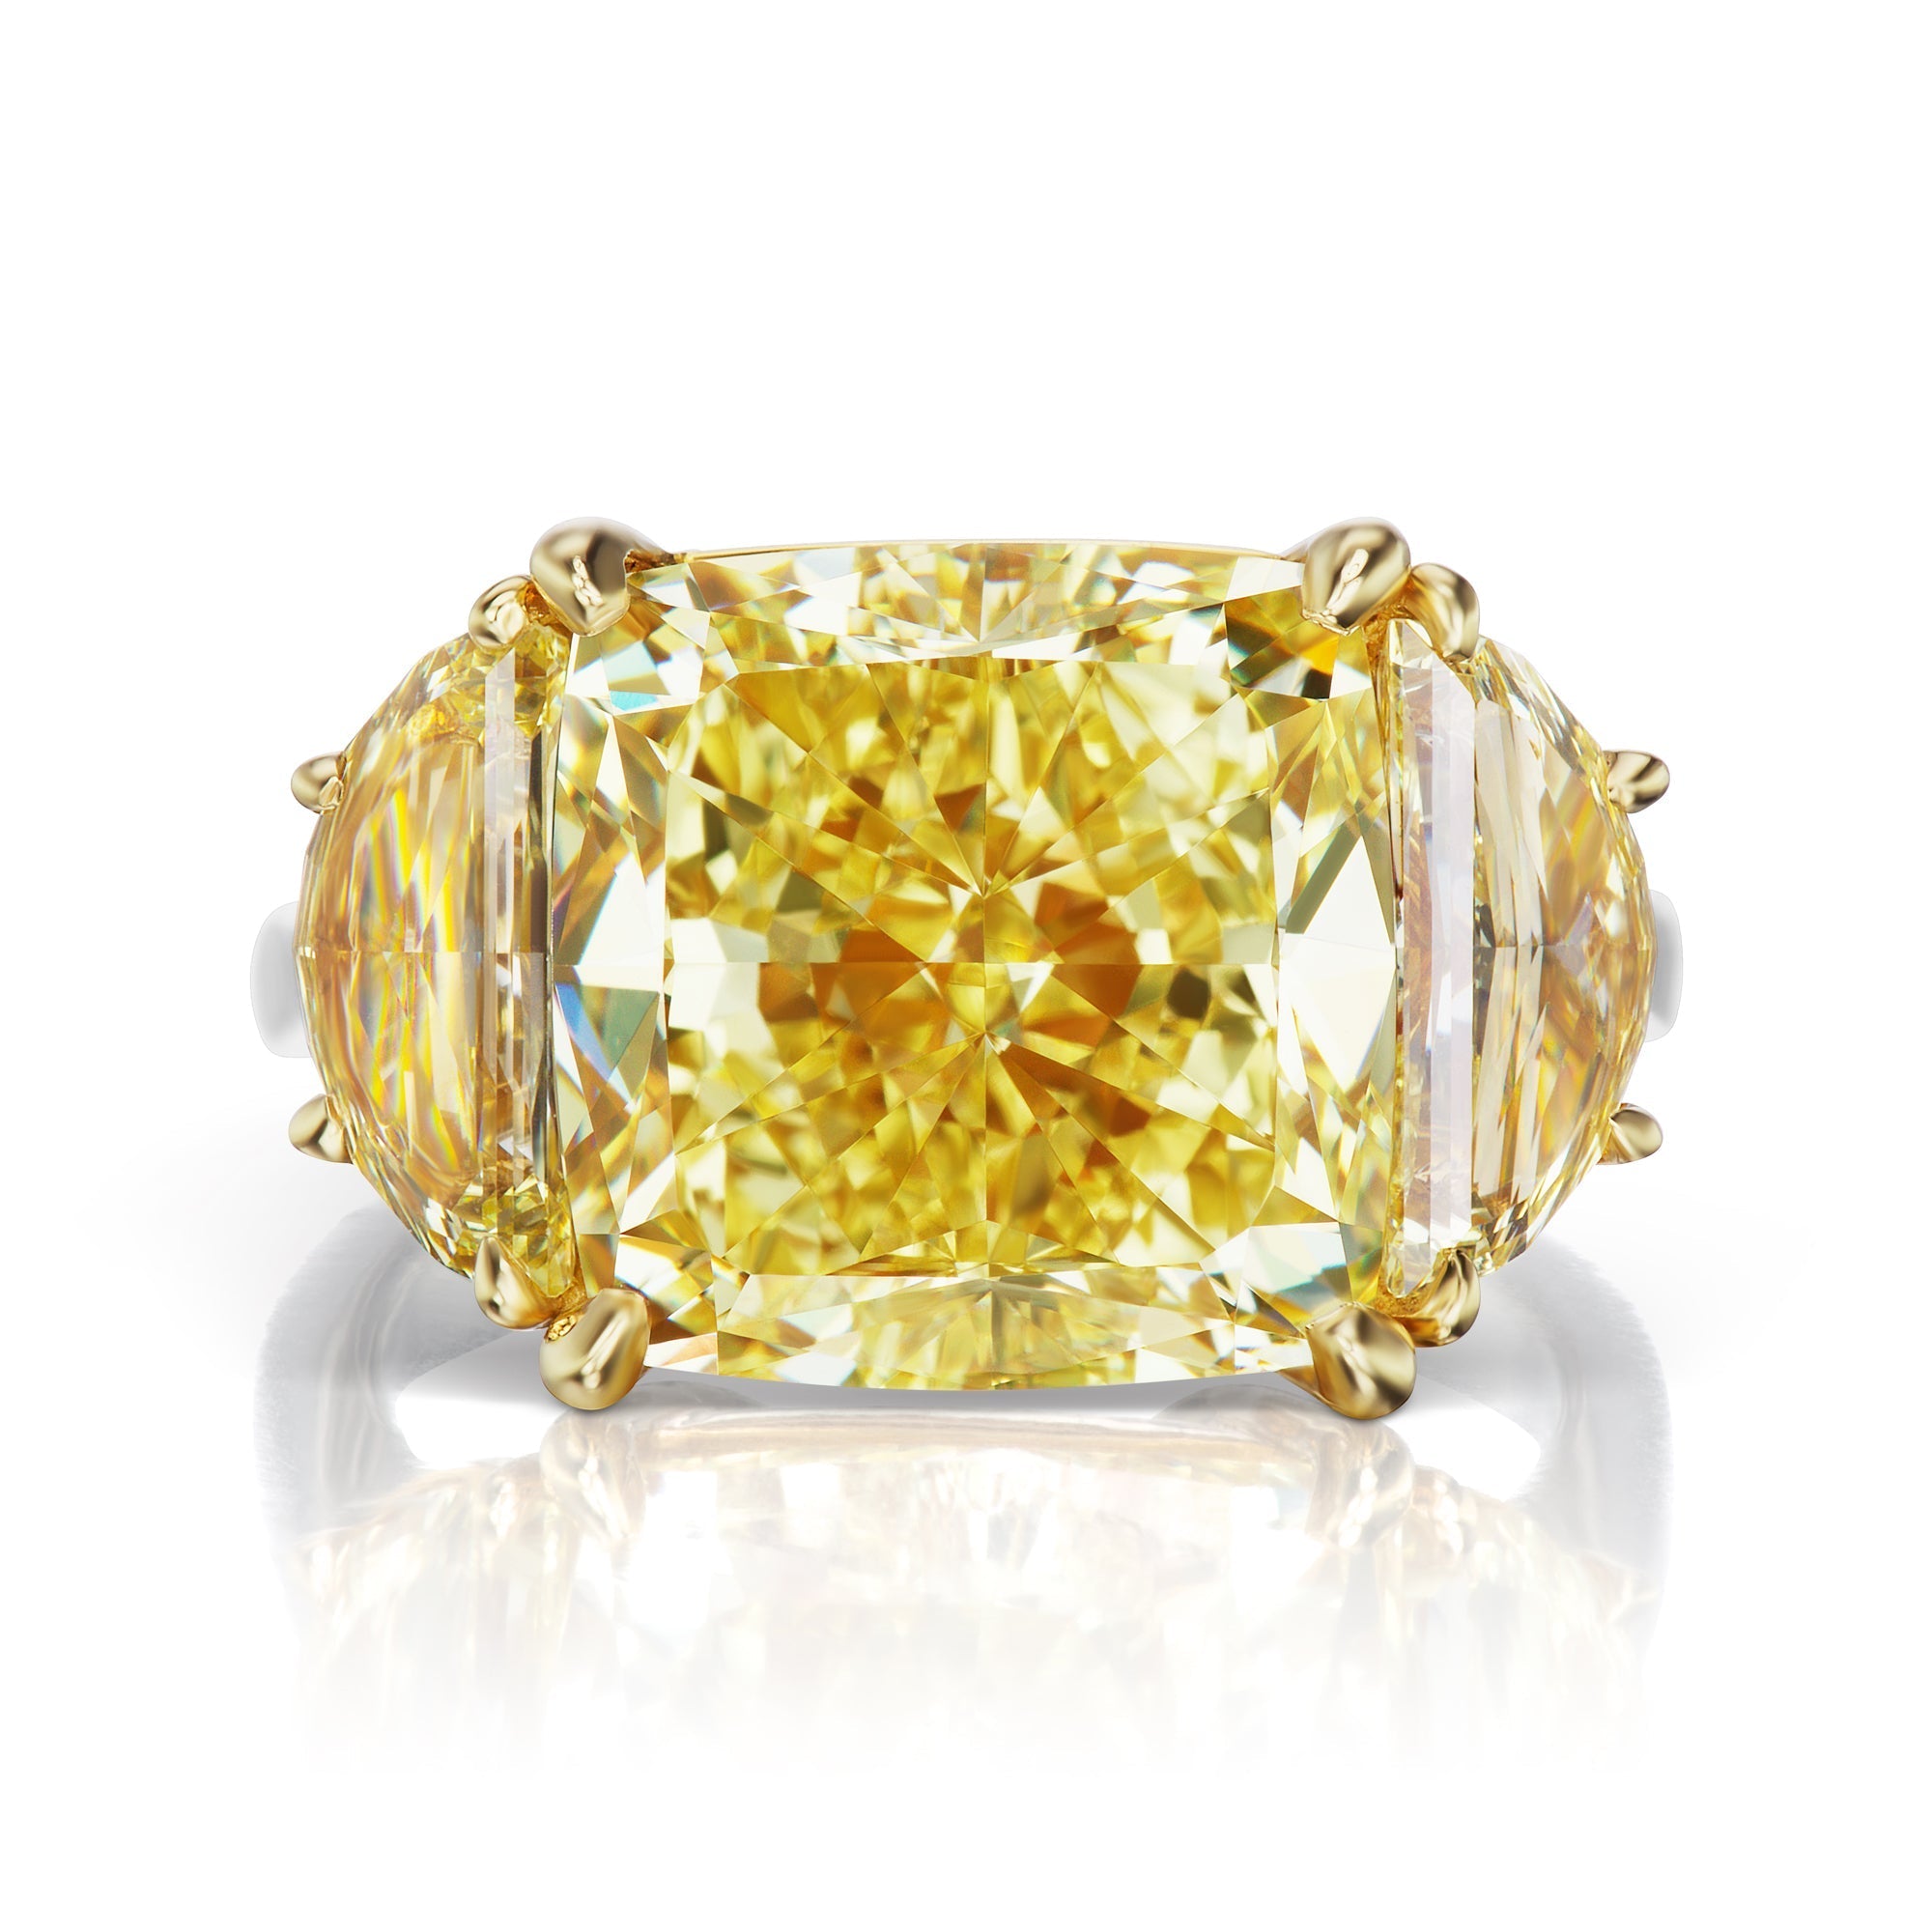 Yellow Diamond Ring Cushion Cut 12 Carat Three Stone Ring in Platinum Front View